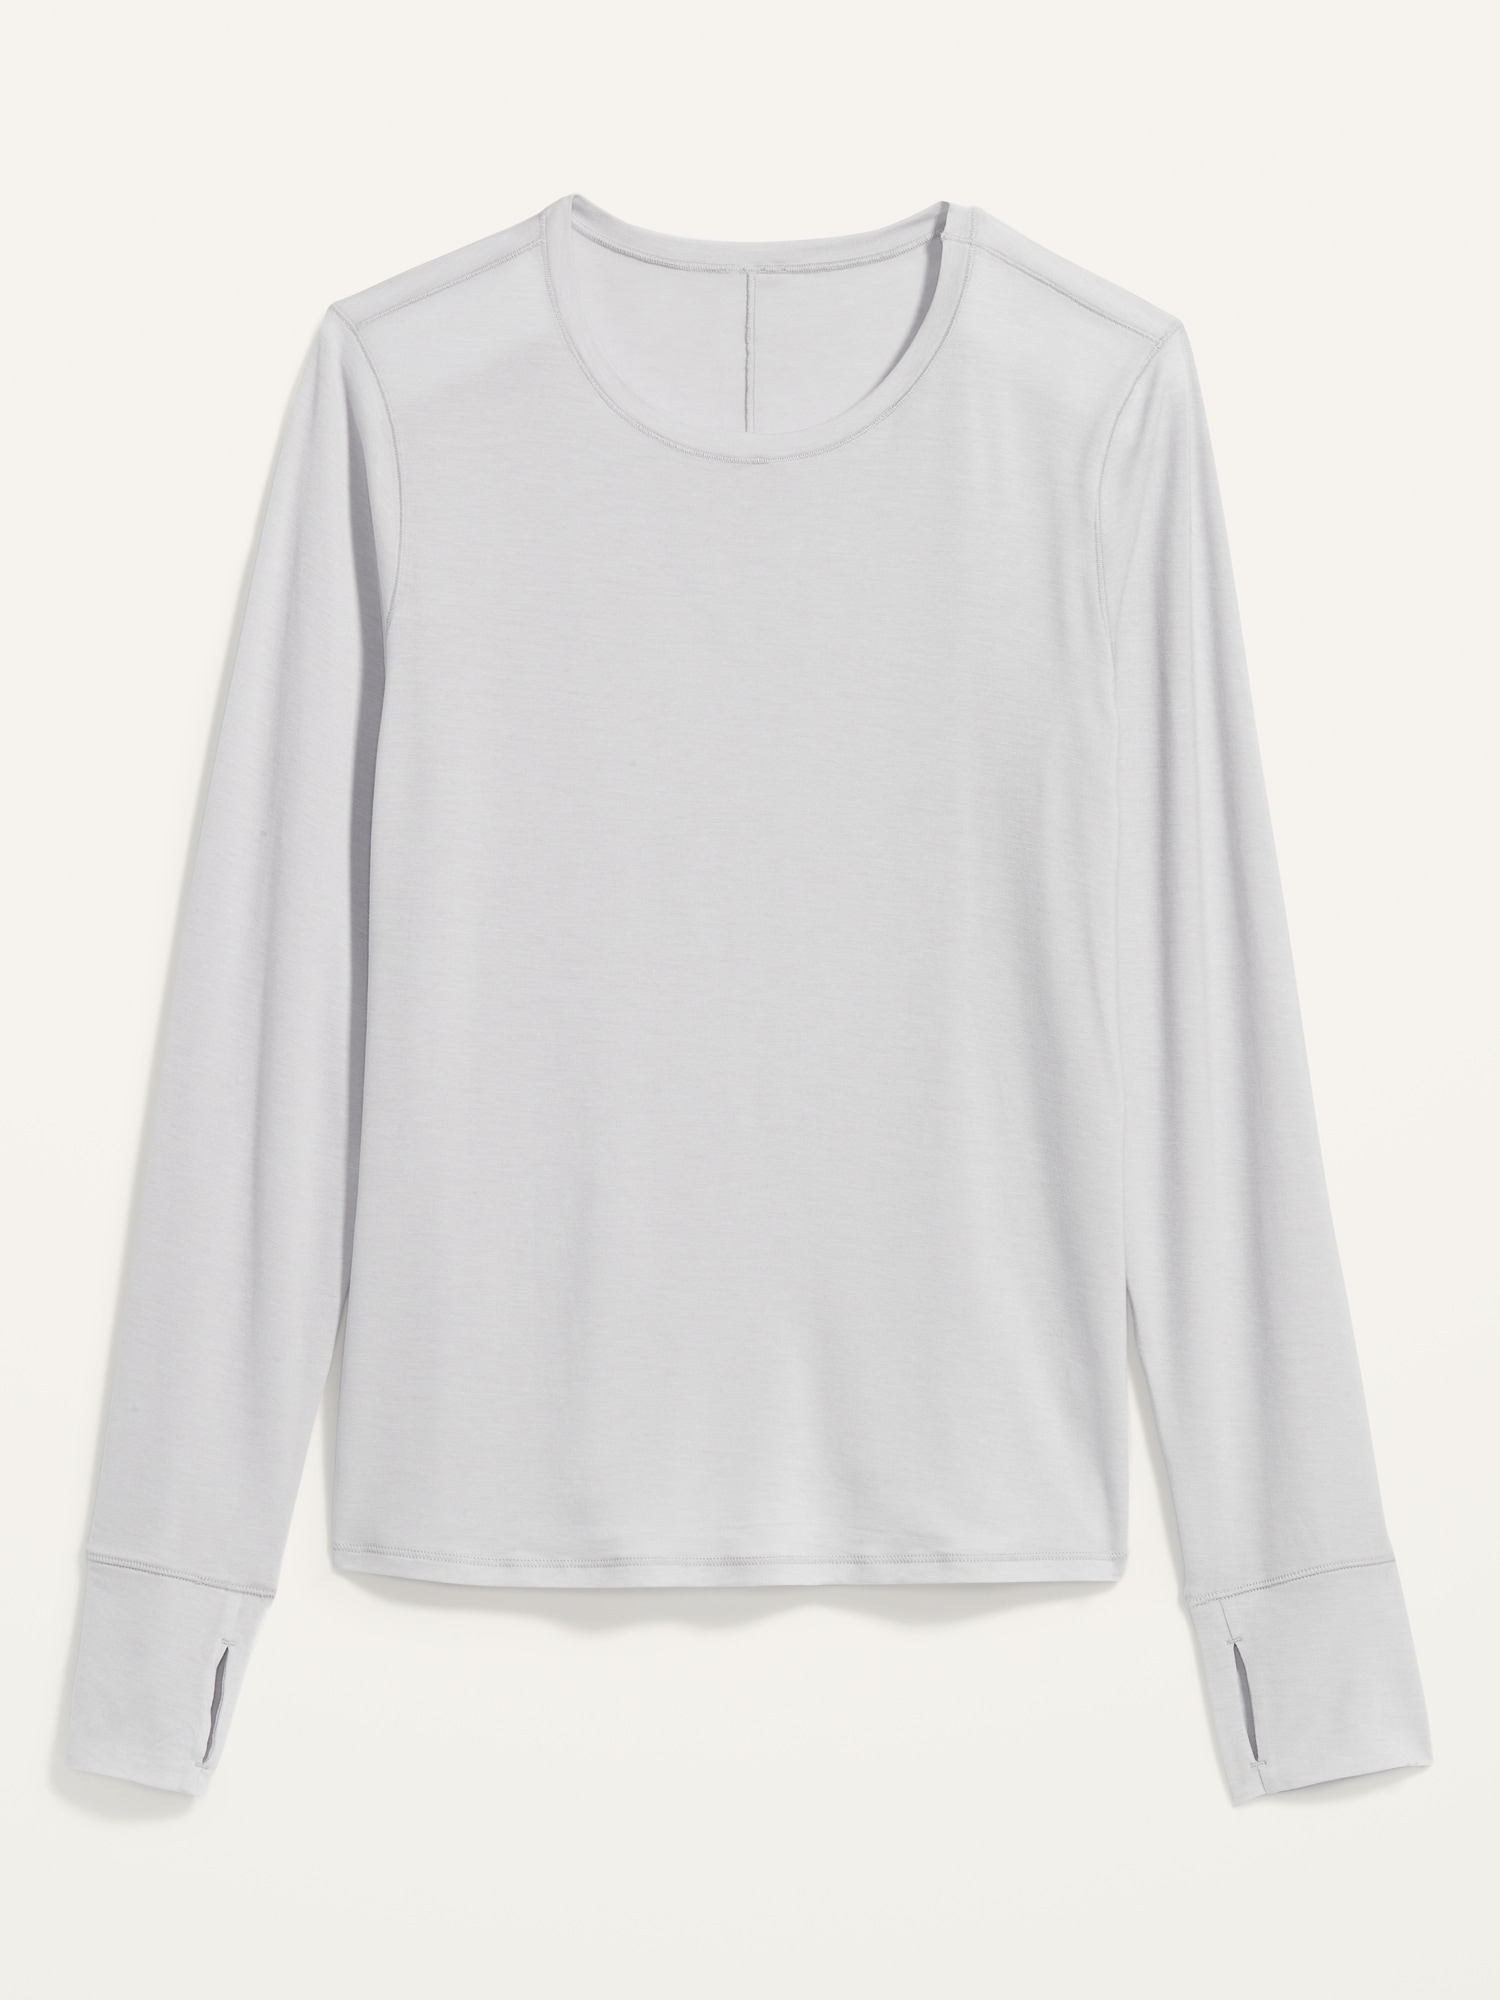 UltraBase Merino Wool Long-Sleeve Base Layer T-Shirt for Women | Old Navy